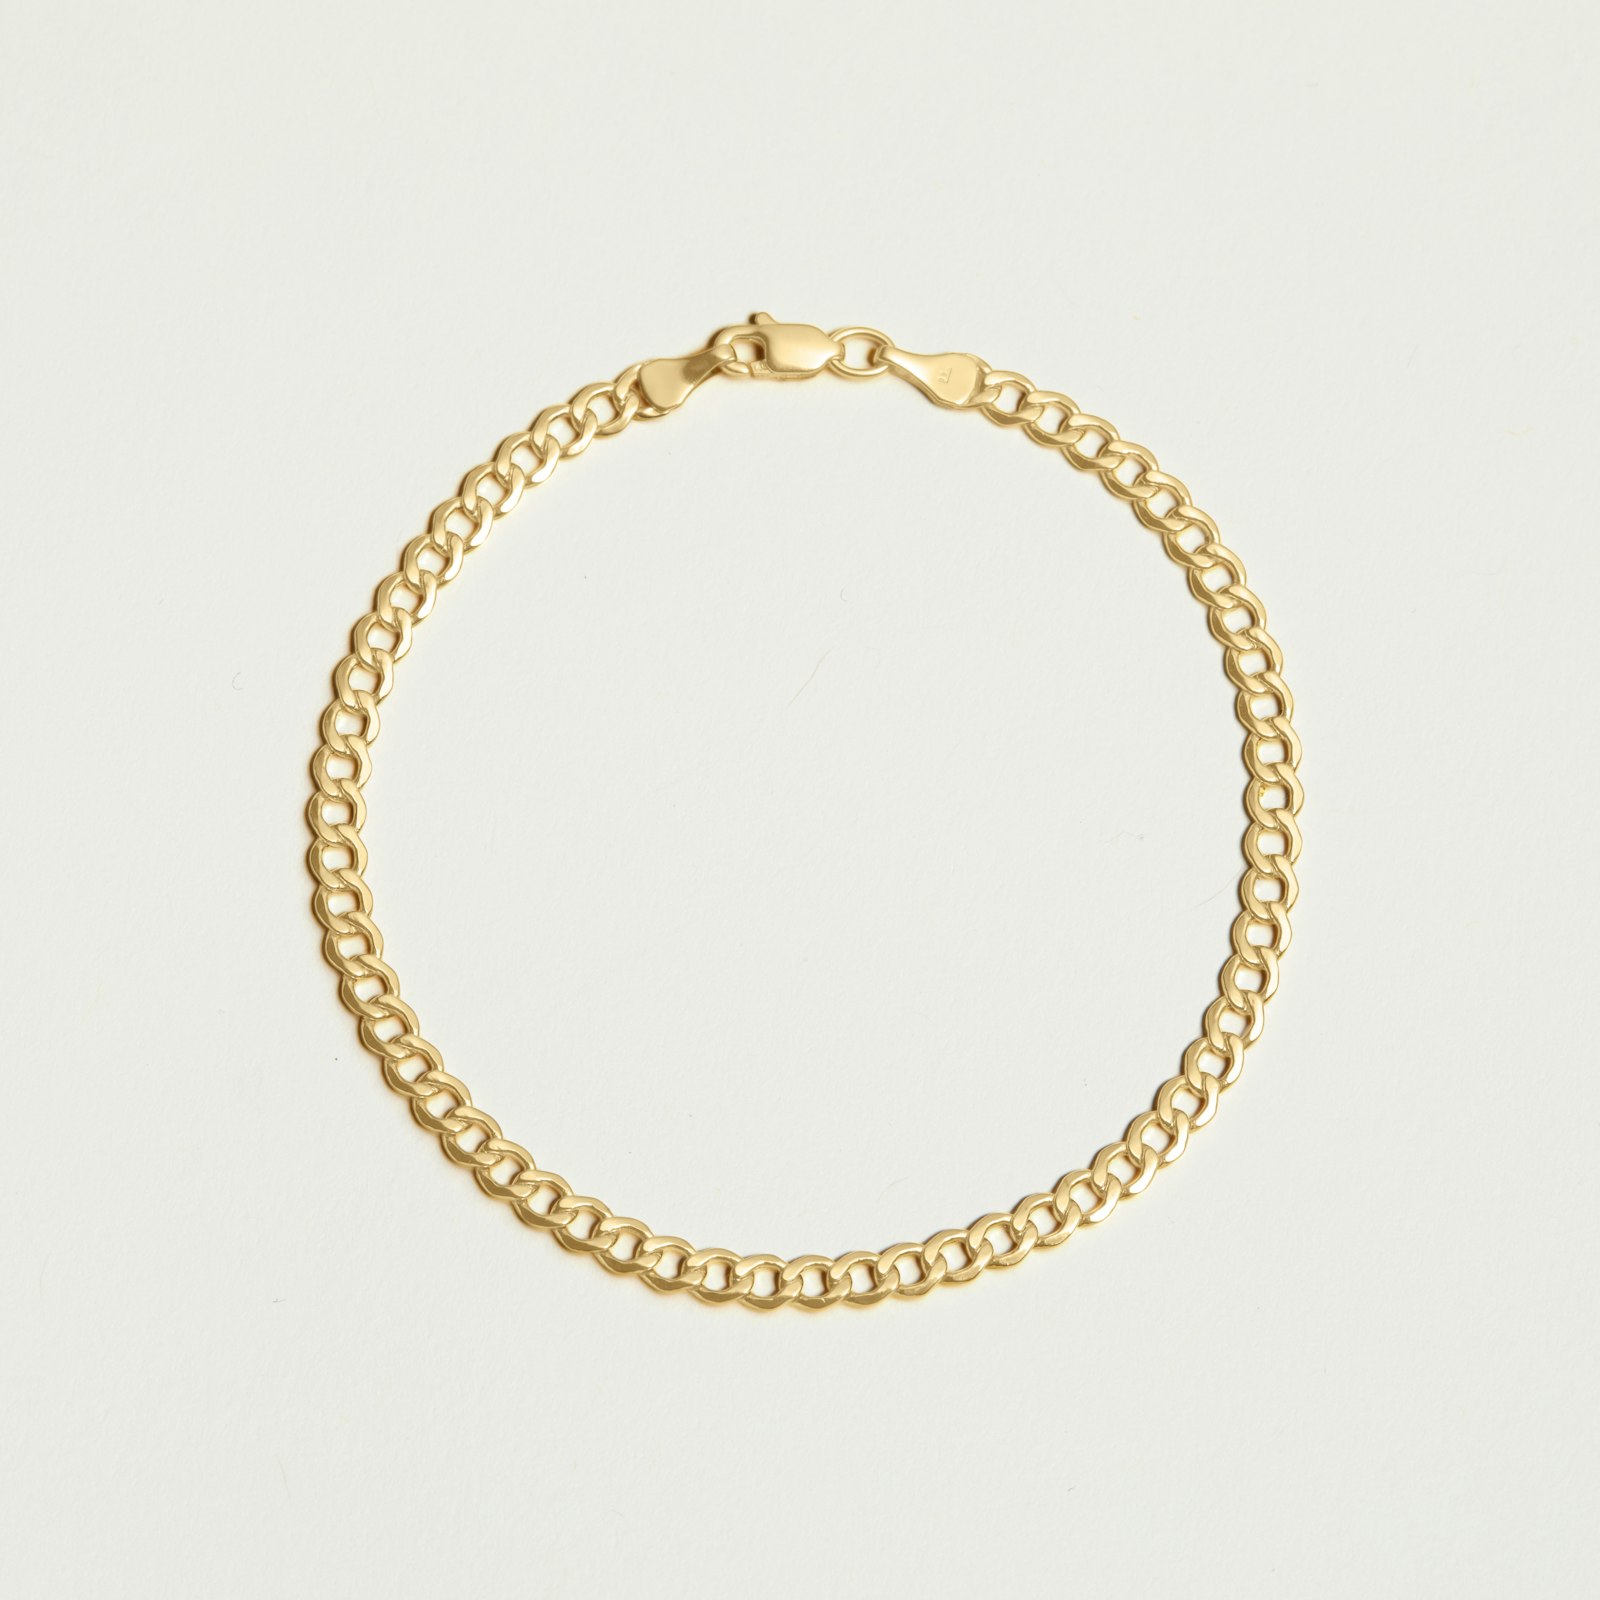 14K Gold Curb Chain Bracelet - 7.5__A_6676_Edited_Edited.jpg